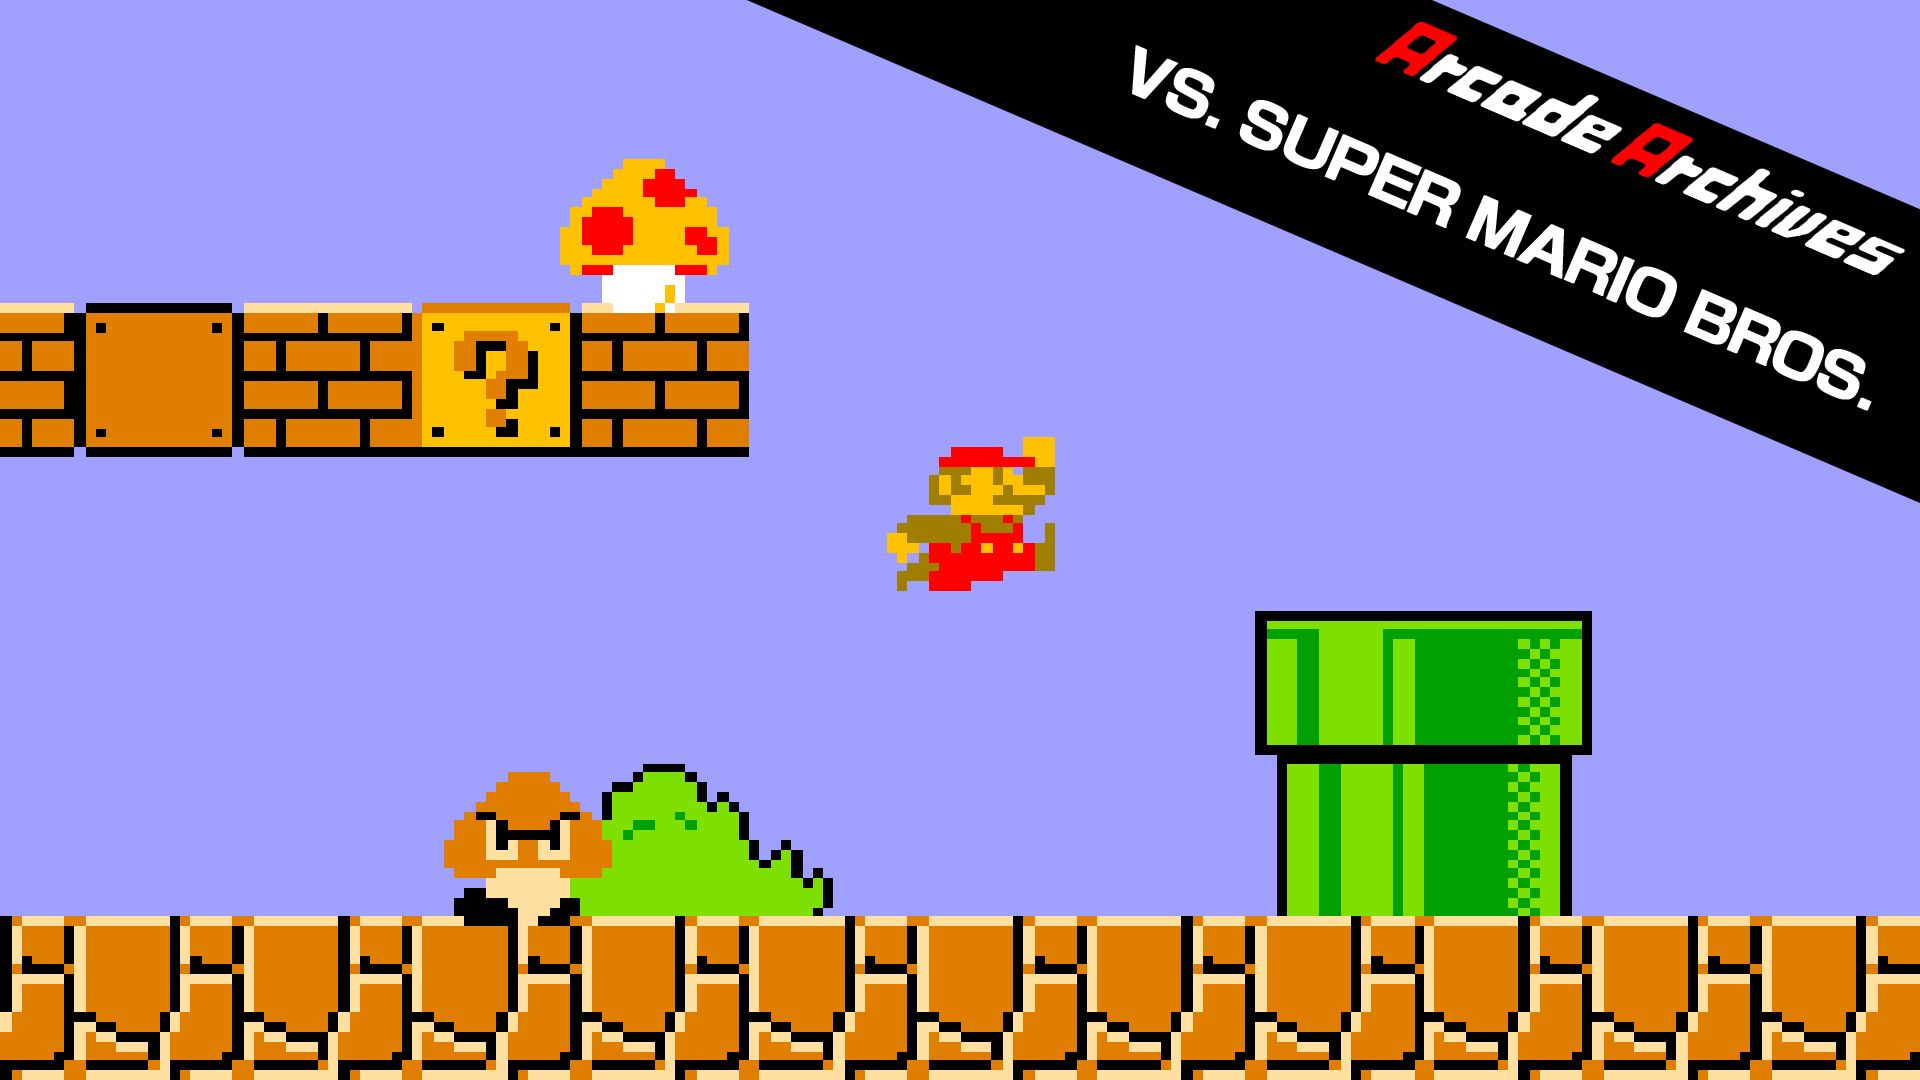 Arcade Archives VS. SUPER MARIO BROS. for Nintendo Switch